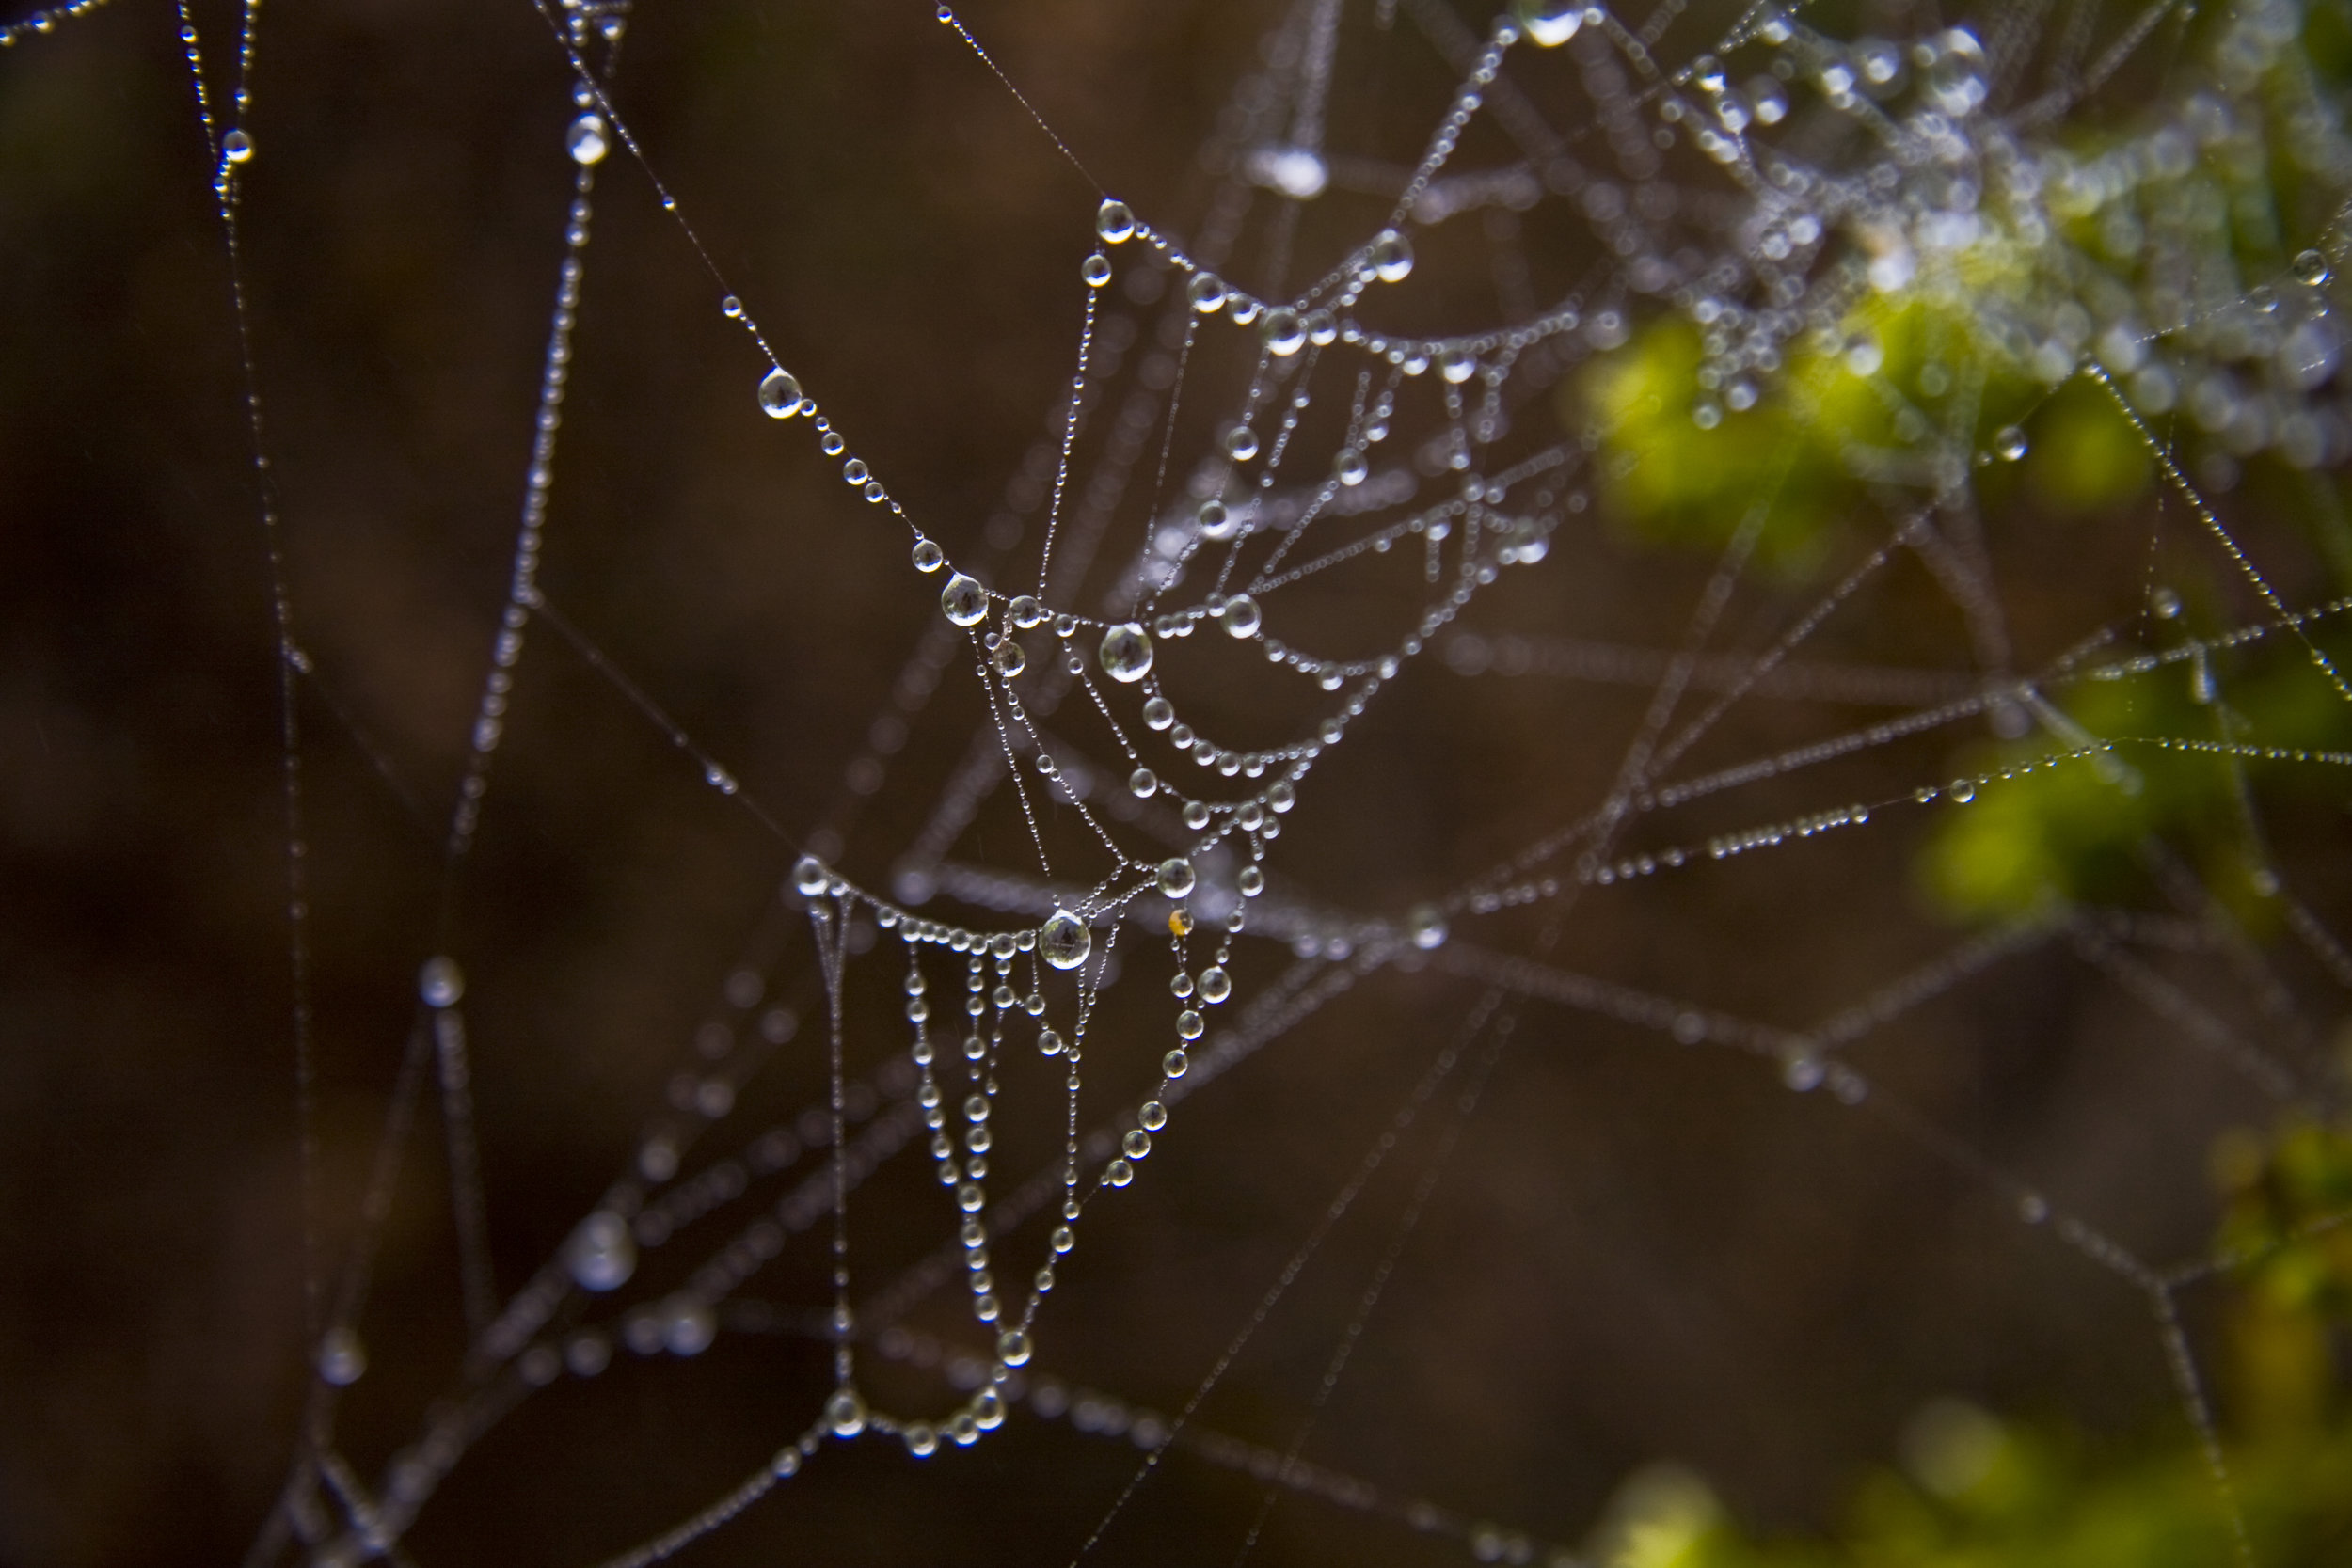 Spiderweb and Dew